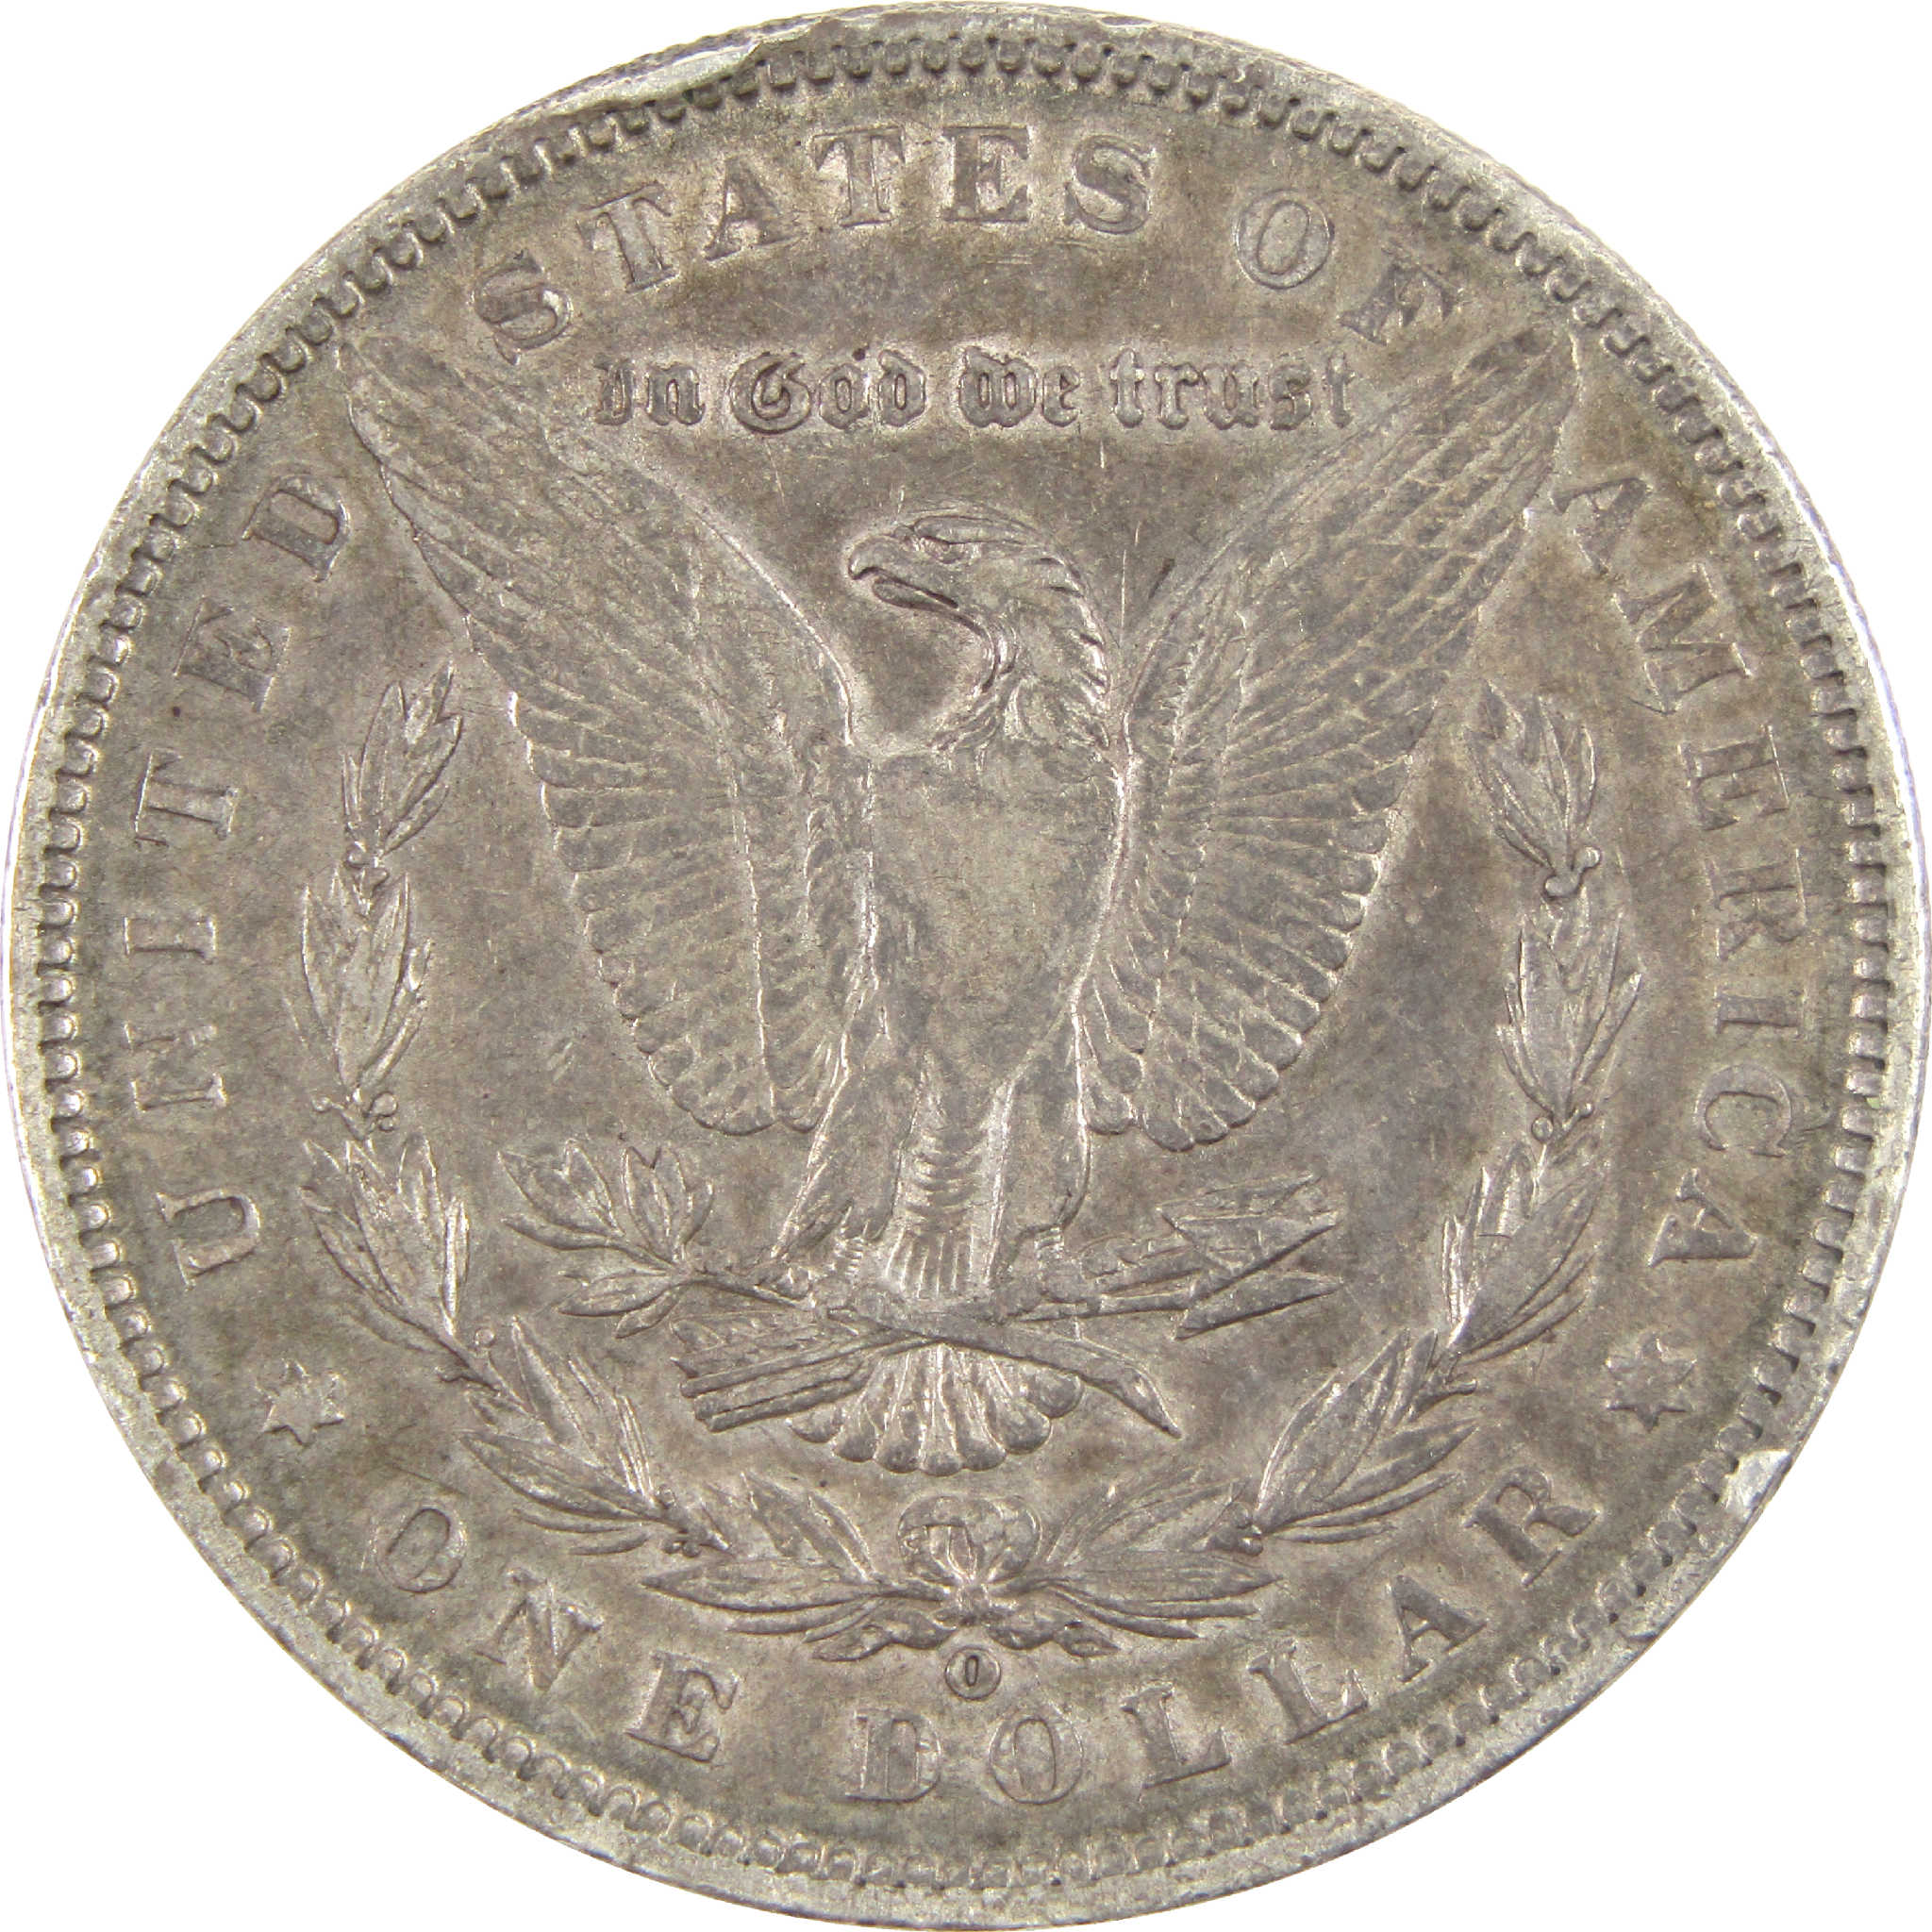 1888 O Hot Lips Morgan Dollar VF Very Fine Silver $1 Coin SKU:CPC6166 - Morgan coin - Morgan silver dollar - Morgan silver dollar for sale - Profile Coins &amp; Collectibles